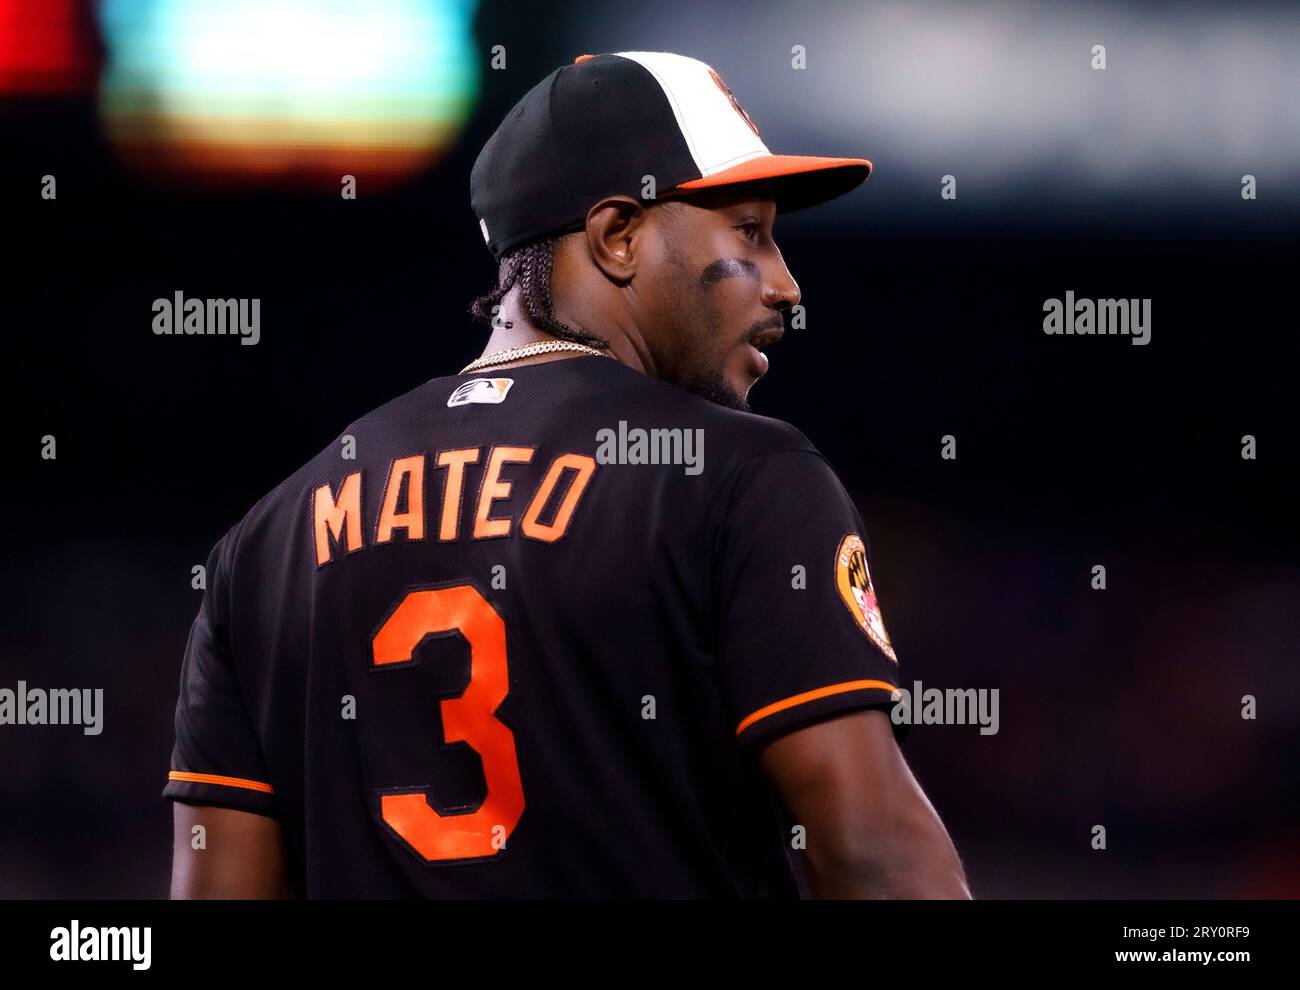 BALTIMORE, MD - SEPTEMBER 27: Baltimore Orioles shortstop Jorge